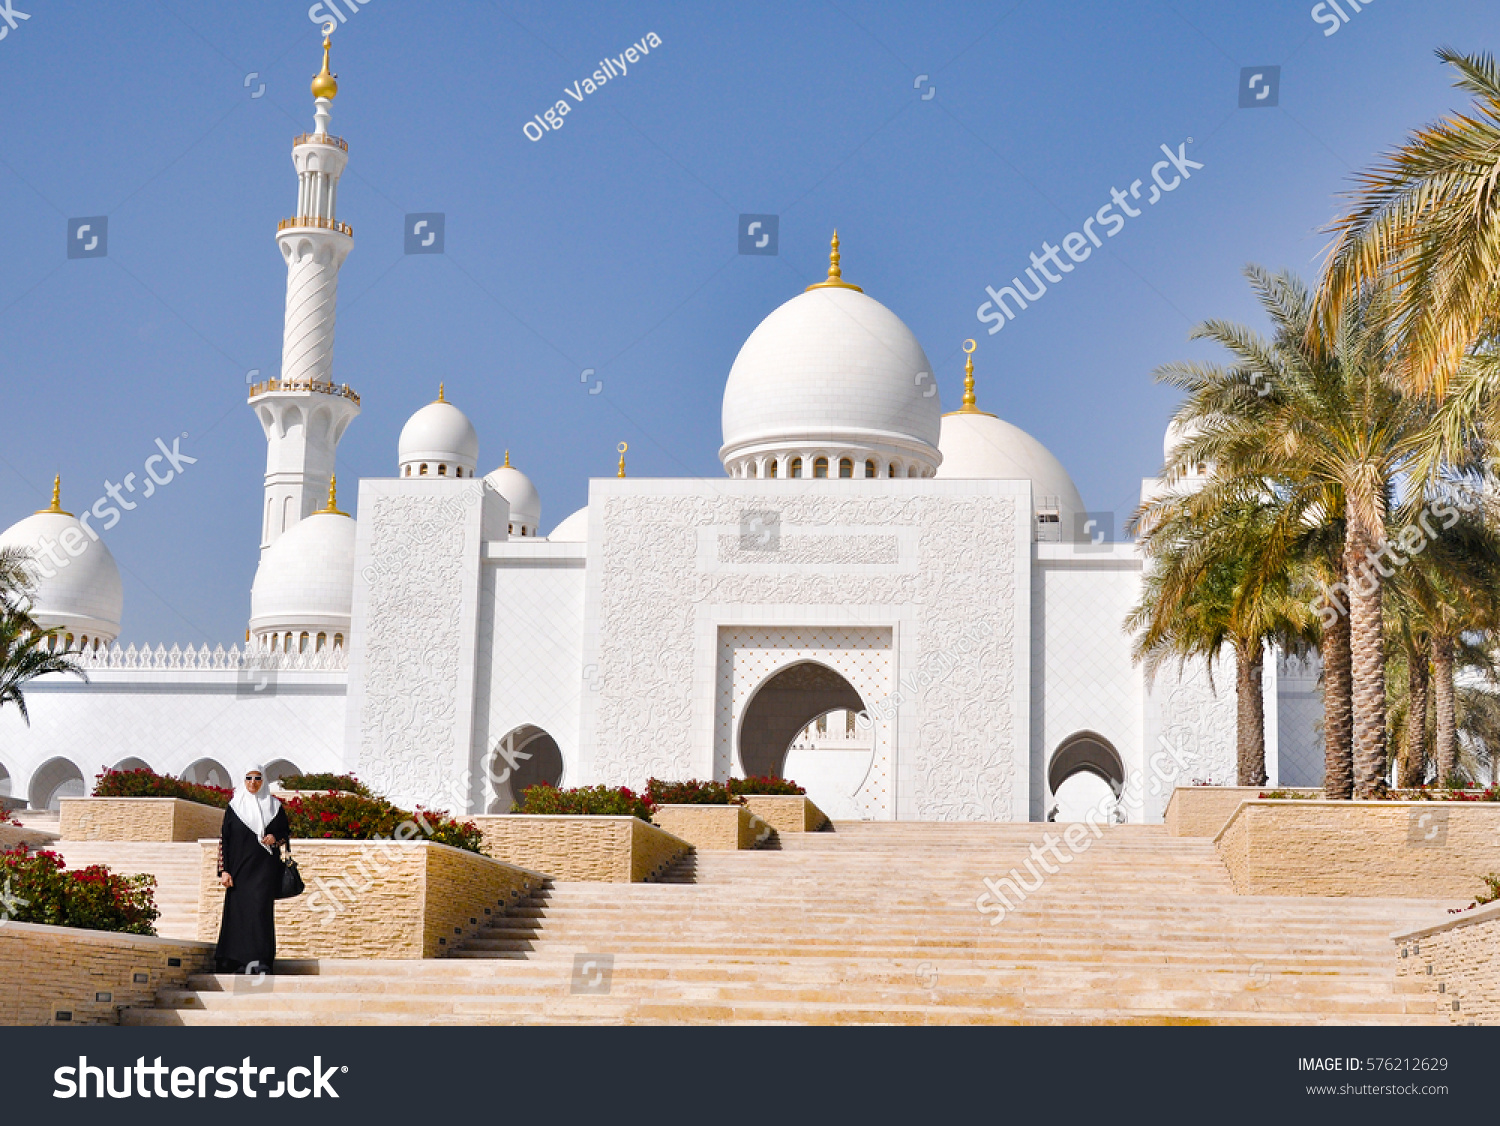 Edit Images Free Online - ABU DHAB | Shutterstock Editor